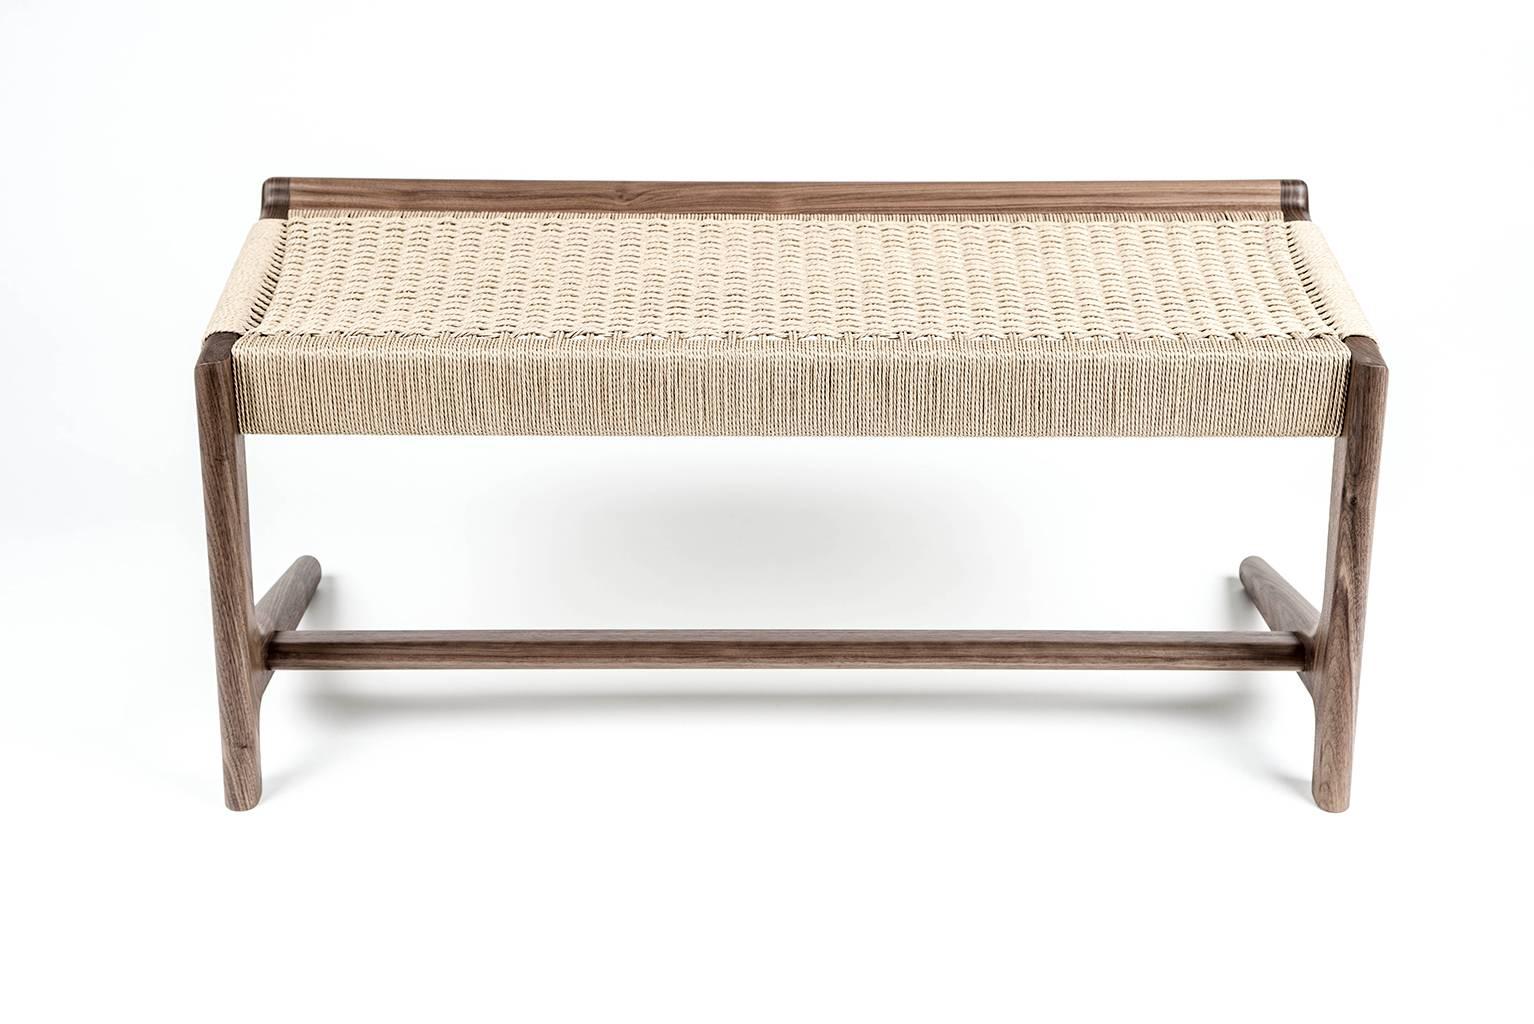 Hand-Woven Bench, Cantilever, Mid Century, Walnut, Danish Cord, Weave, Hardwood, Semigood  For Sale